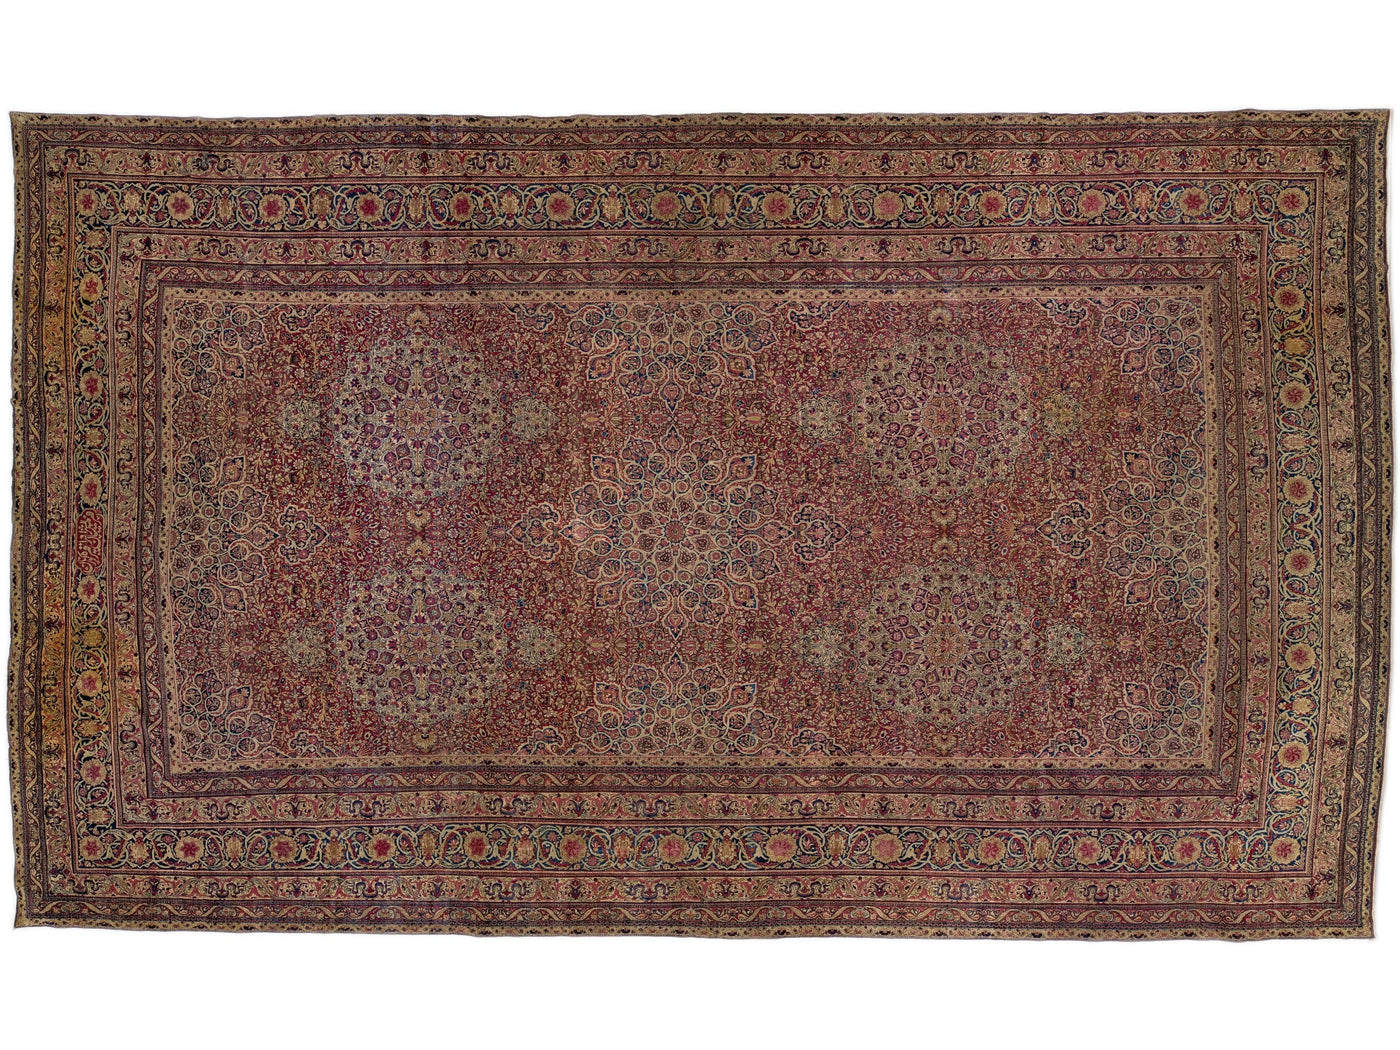 Antique Persian Kerman Handmade Multicolor Wool Rug with Rosette Design